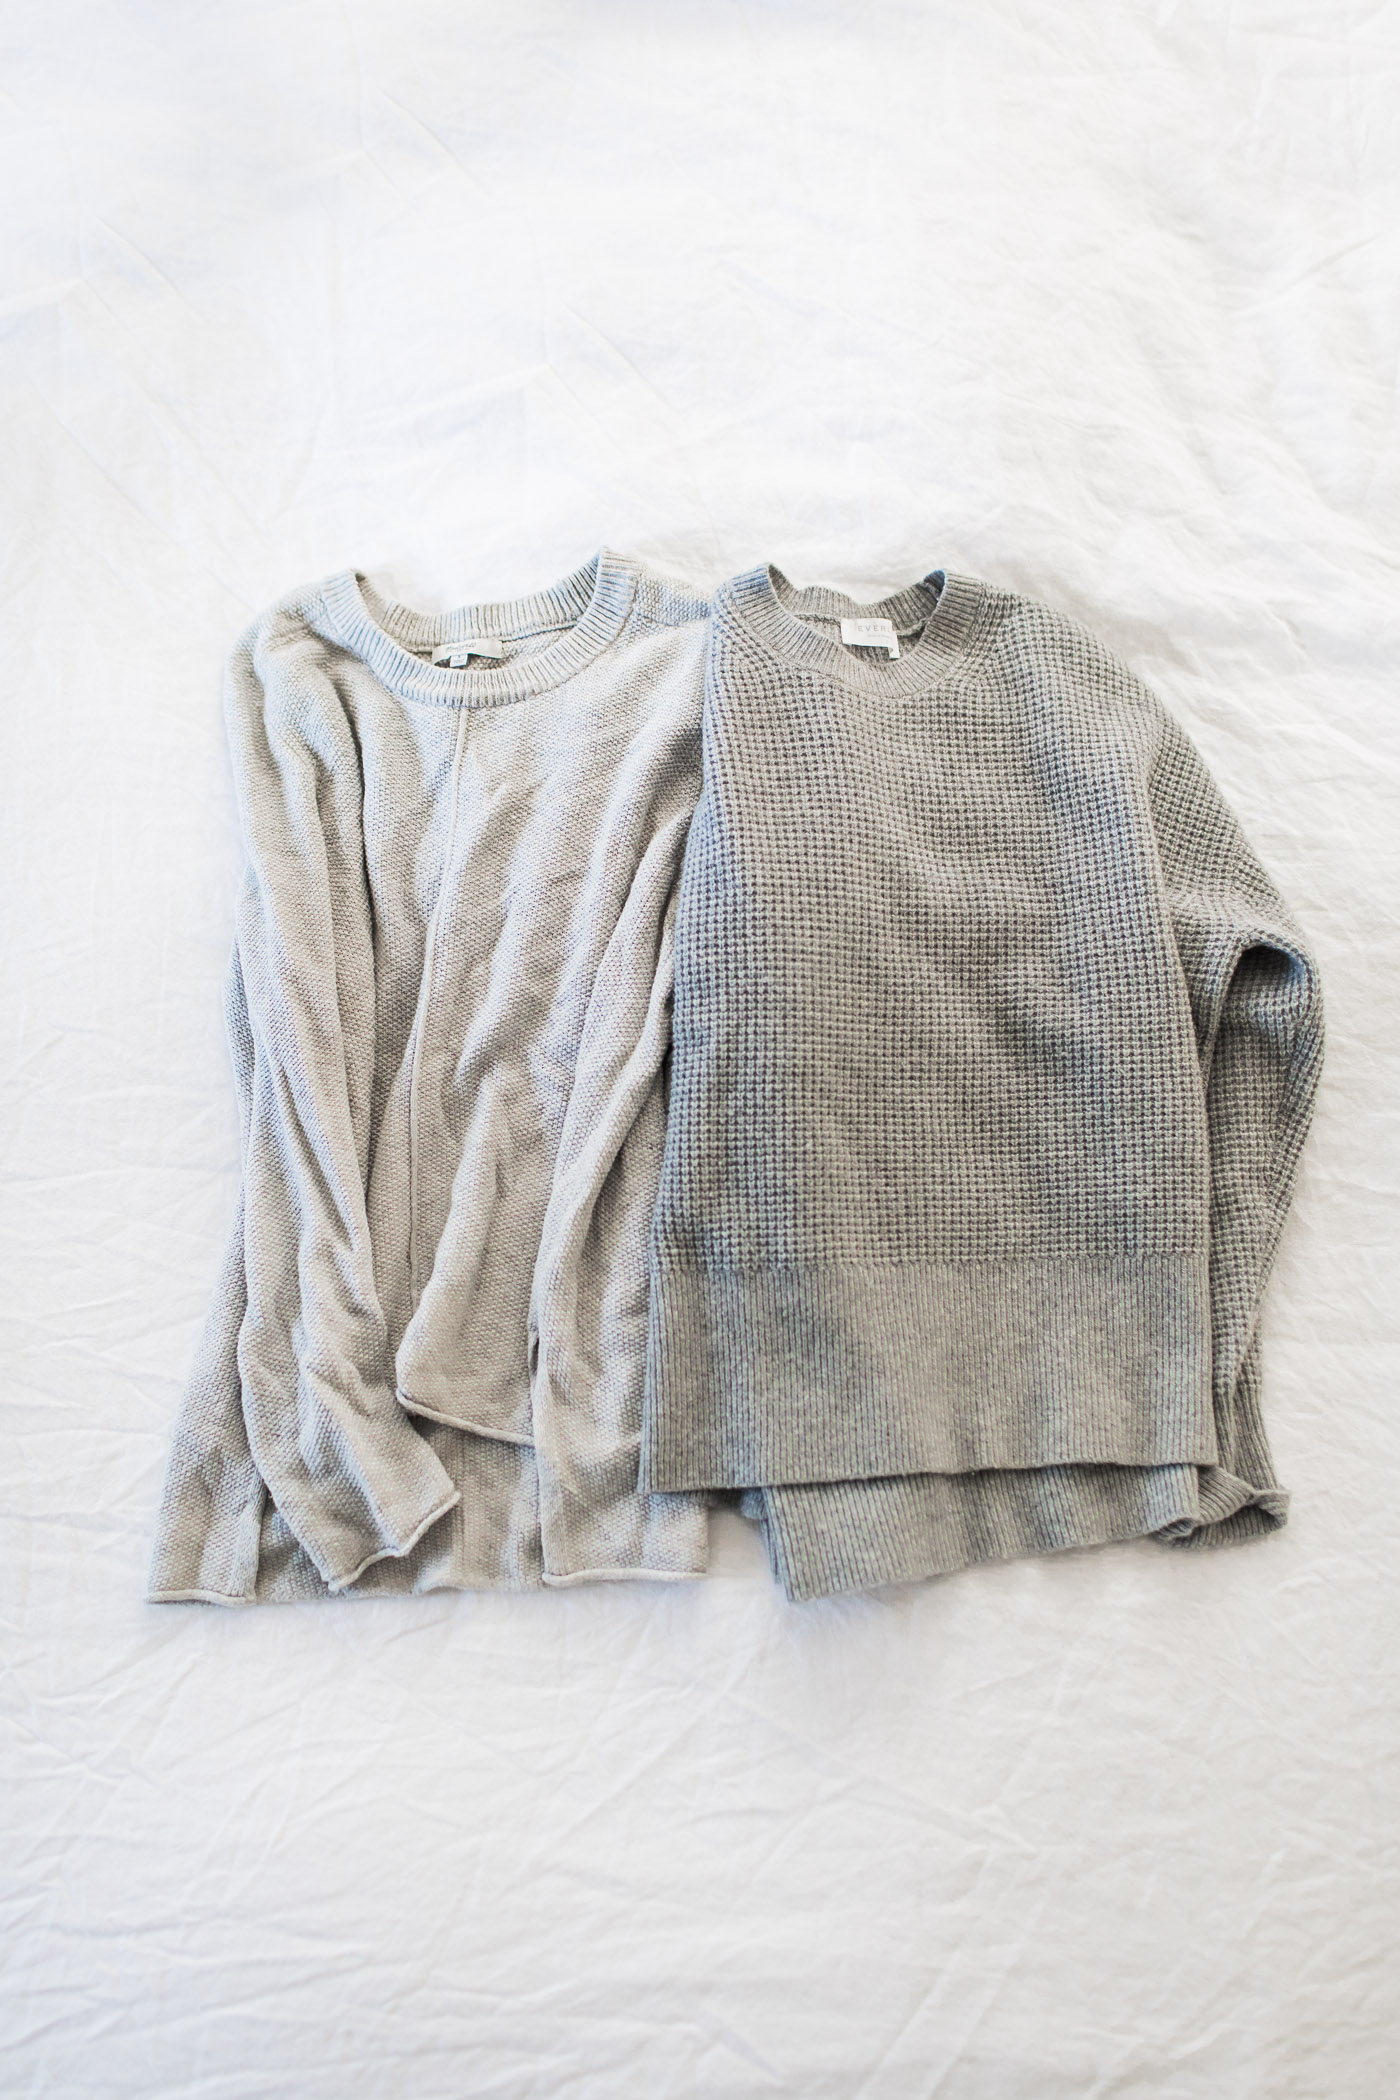 Feel Good Winter Wardrobe Swaps - Eco-friendly, socially conscious wardrobe duplicates for winter staples.